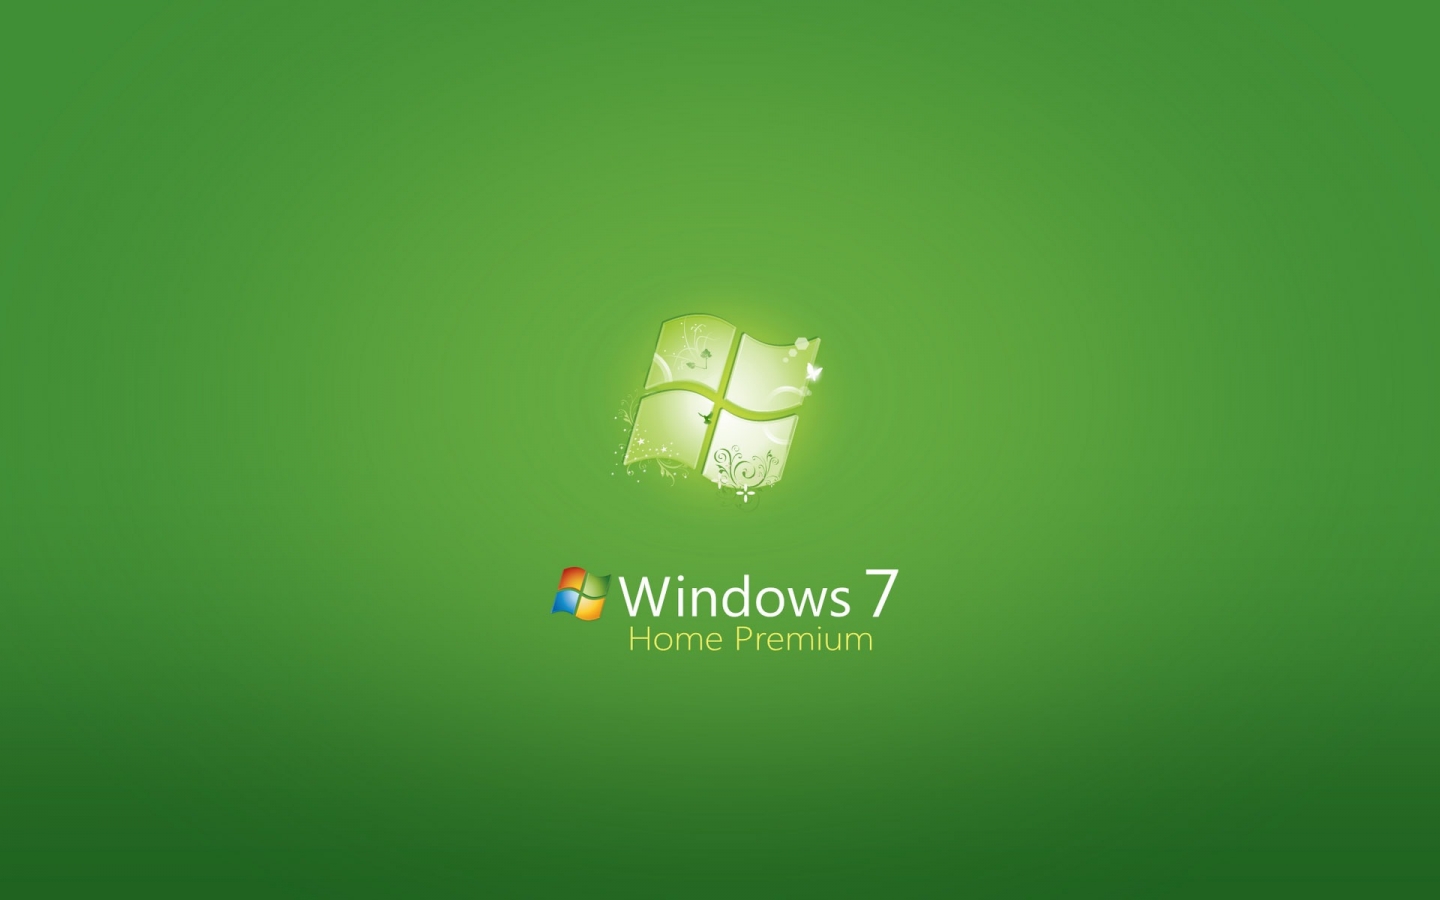 Windows 7 Home Premium Green for 1440 x 900 widescreen resolution